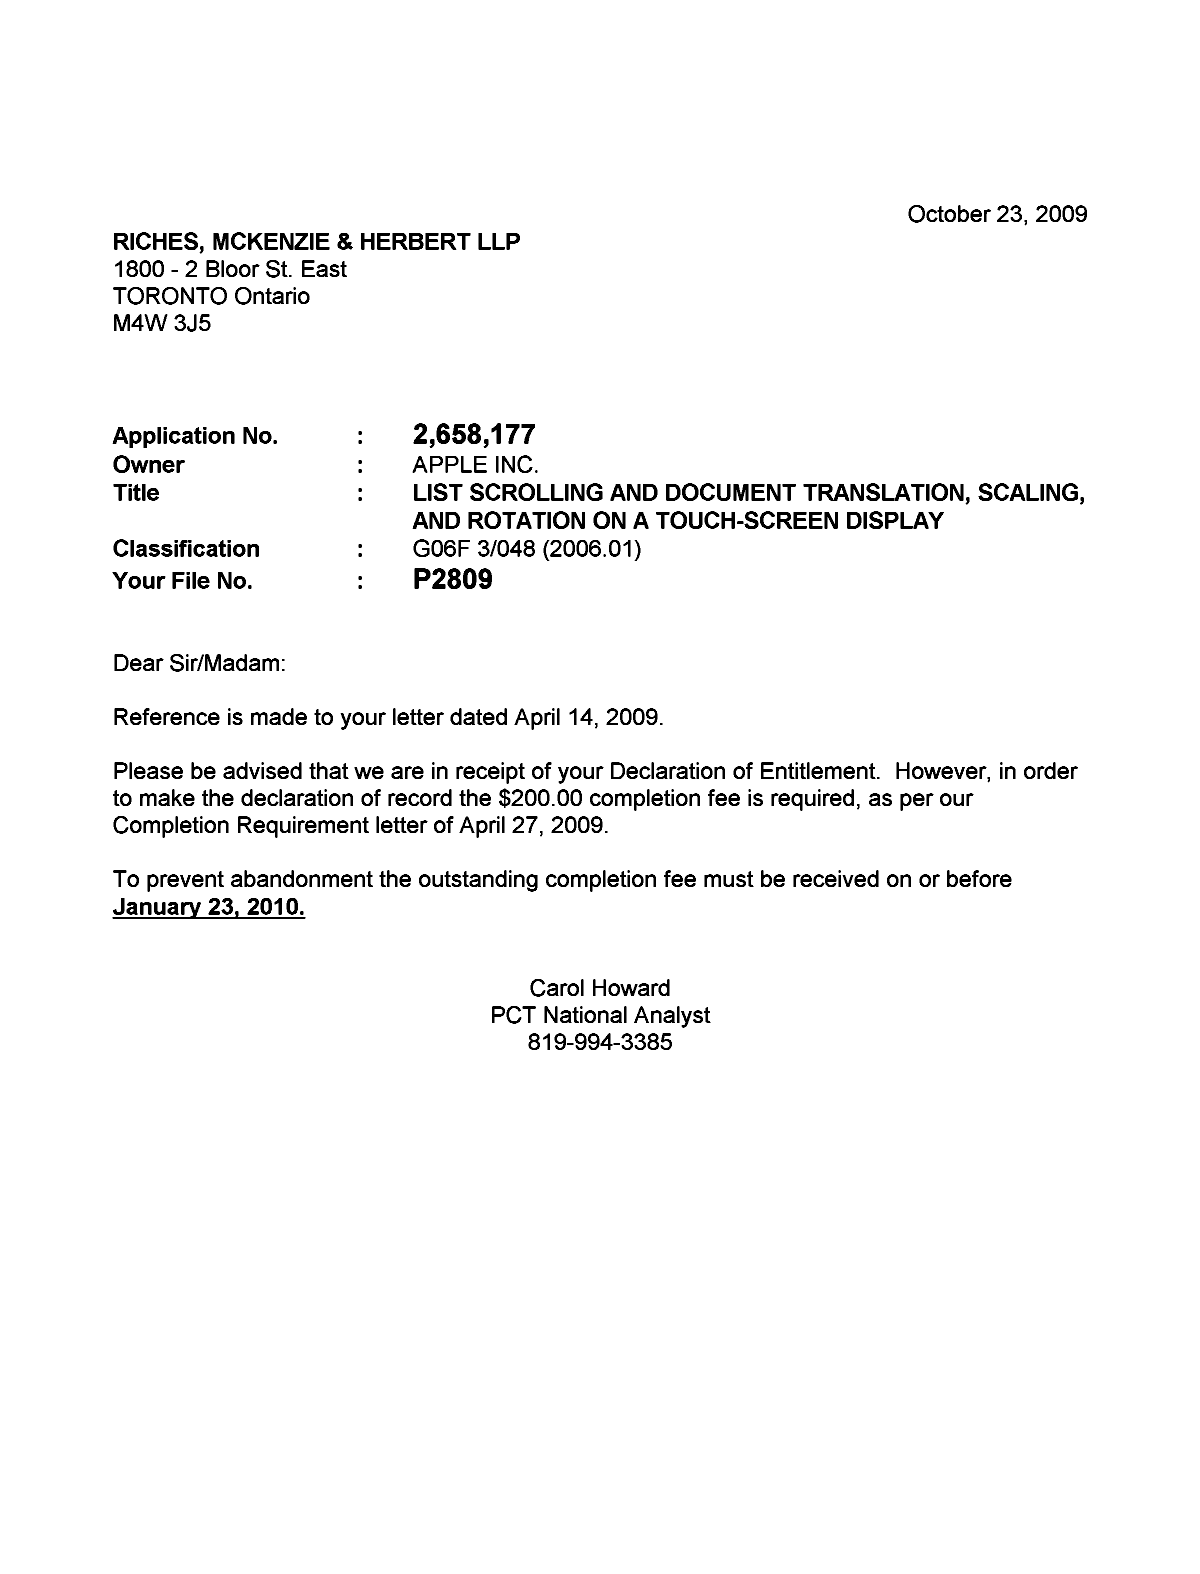 Canadian Patent Document 2658177. Correspondence 20091023. Image 1 of 1